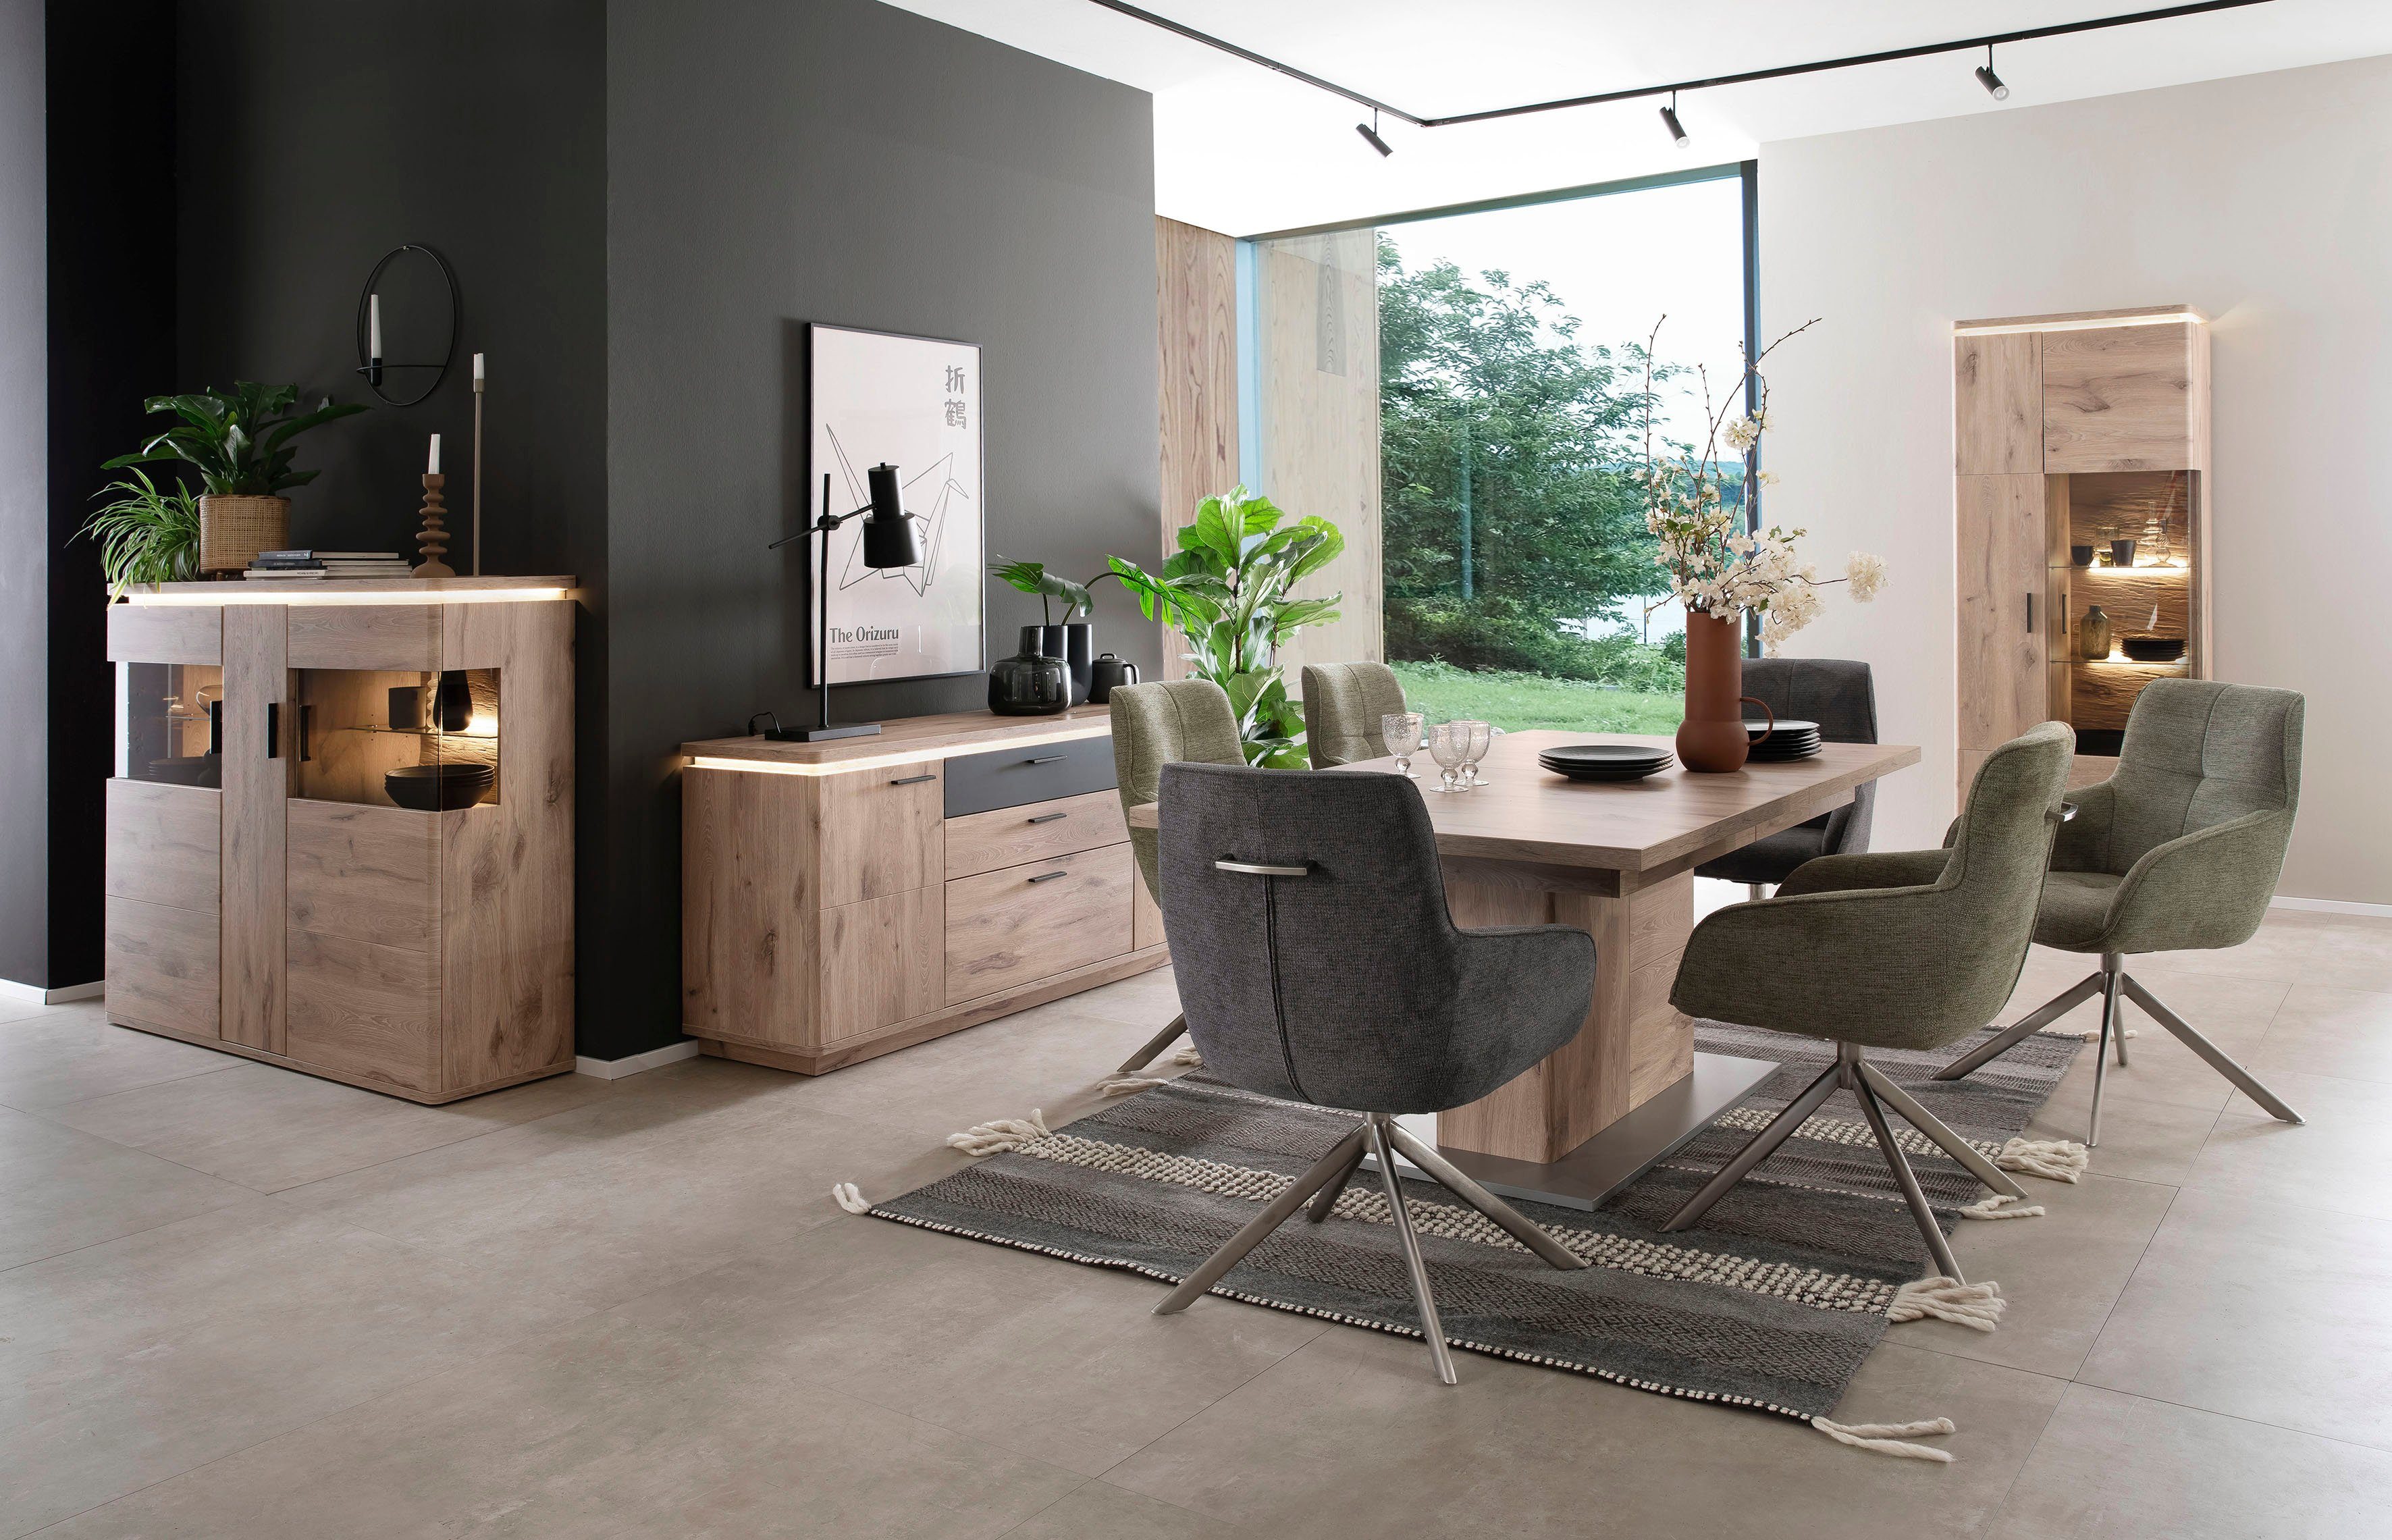 MCA furniture 4-Fußstuhl Xativa (2 cm mit Olive Nivellierung, 180°drehbar 49 Komfortsitzhöhe St)